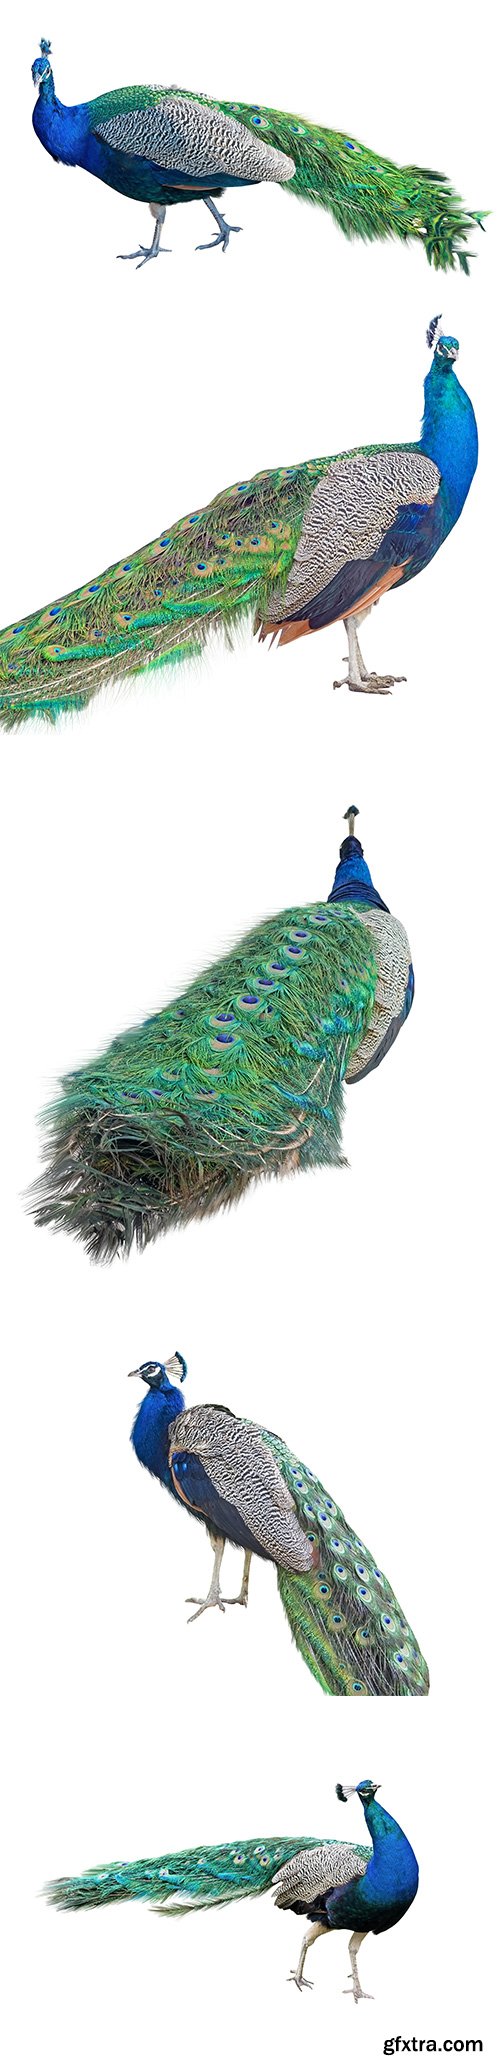 Peacock Isolated - 10xJPGs